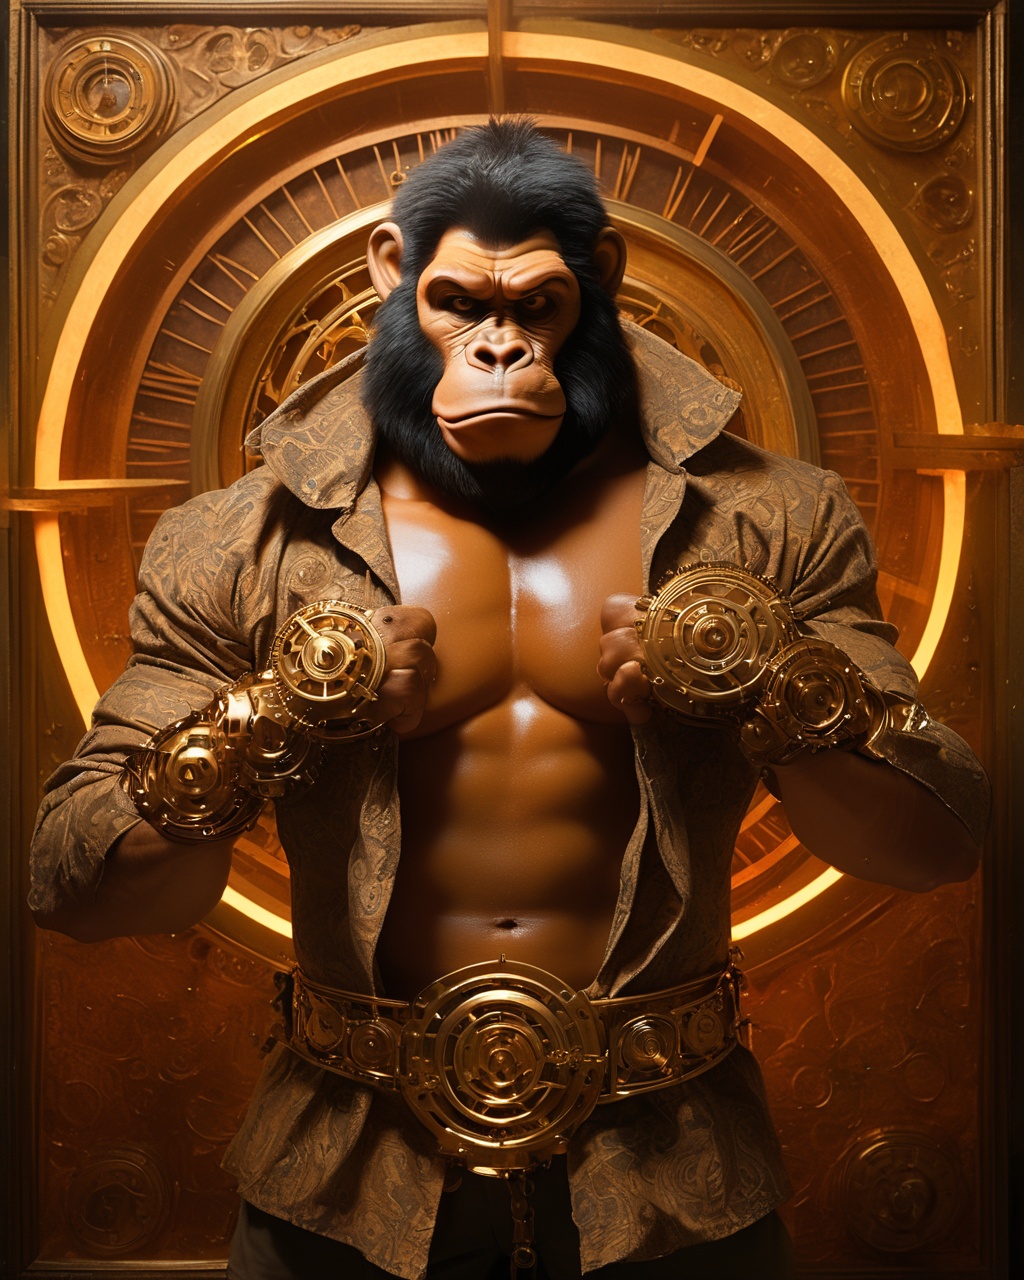 steampunk style (Op Art:0.8),(male:1.5),(Donkey Kong 傻猩猩Donkey Kong 大金刚powerful playful gorilla DK Island banana hoard tie-wearing barrel-smashing jungle hero:1.6),(Knolling Photography:0.7),(muscular male:1.3),(backlighting:1.4),(cinematic lighting:1.4),(masterpiece:1.4),super detail,(glass shiny (textured skin):0.3),high details,(back:0.3),(light and shadow:0.6),(burly:0.3),<lora:【写意山水】绝色山海LORA XL-家叔马丁Mr_M_v1.0:0.14>,(sweating  muscular muscle topless fighting barefoot barechest sweating naked:1.6),(well defined:1.5),(clothes:1.6),<lora:XL_LORAneg4all_bdsqlsz_xl_V7>,<lora:次元概念XL_1:0.5>,<lora:魔法阵-[SDXL白棱Lora]_v1.0:0.5>,<lora:XL_LORA_DetailedEyes_V3:0.6>,(cloud and fog:0.8),(close-up:0.6),(upper_body:0.2),(burly:0.1),(portrait:0.8),dim,(muscular:0.3),(vibrant energy:0.6),(fullbody:0.9),<lora:SDXL手绘神秘风塔罗牌_v1.0:0.3>,(true style:1.4),(masterpiece:0.8),(hair:0.5),(analog:0.8),(old photo:0.7),(old fade polaroid:0.6),(furry:0.6),<lora:奇幻特性加强:-0.1>,(dynamic:0.5),(dramatic:0.4),(Luminsm:0.8),(Non-Fiction:0.8),(optical illusion:0.7),(abstract:0.5),(geometric pattern:0.5),(impression of movement:1.1),(traditional dress:0.3),<lora:筑梦工业_ 天神判官-机器人XL_v1.0:0.1>,<lora:dongdongXL0101FANT8Kdep:0.3>,(loincloth:0.3), . antique, mechanical, brass and copper tones, gears, intricate, detailed